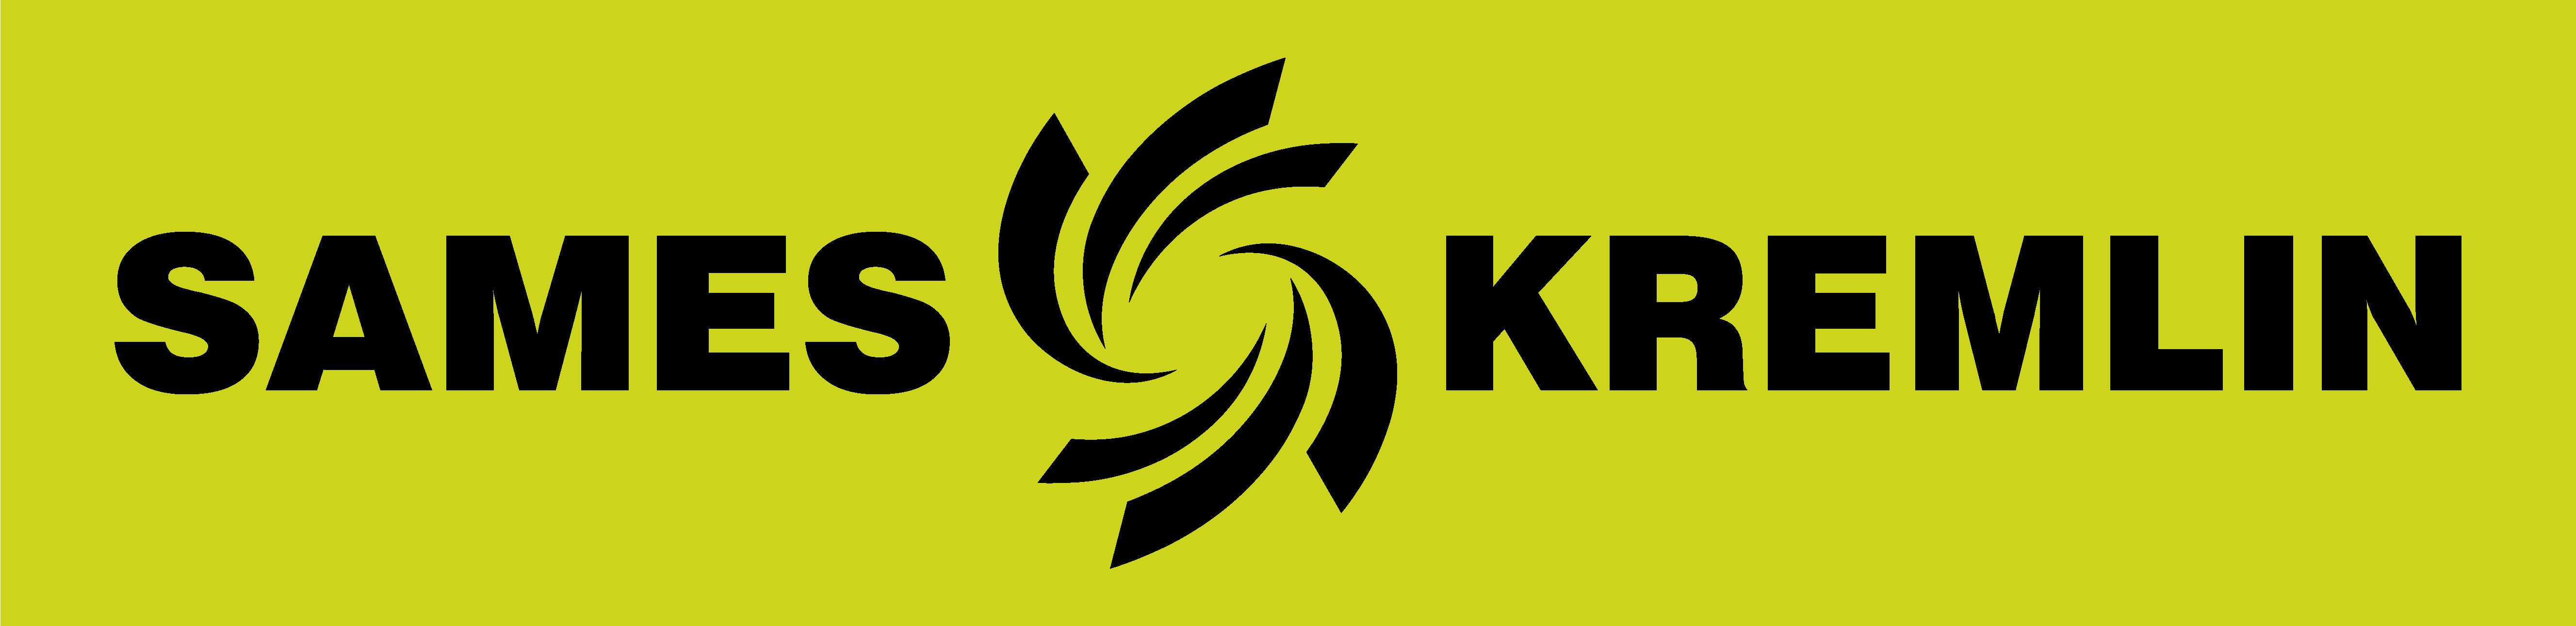 Logo_Black-on-Green_SAMES-KREMLIN.jpg